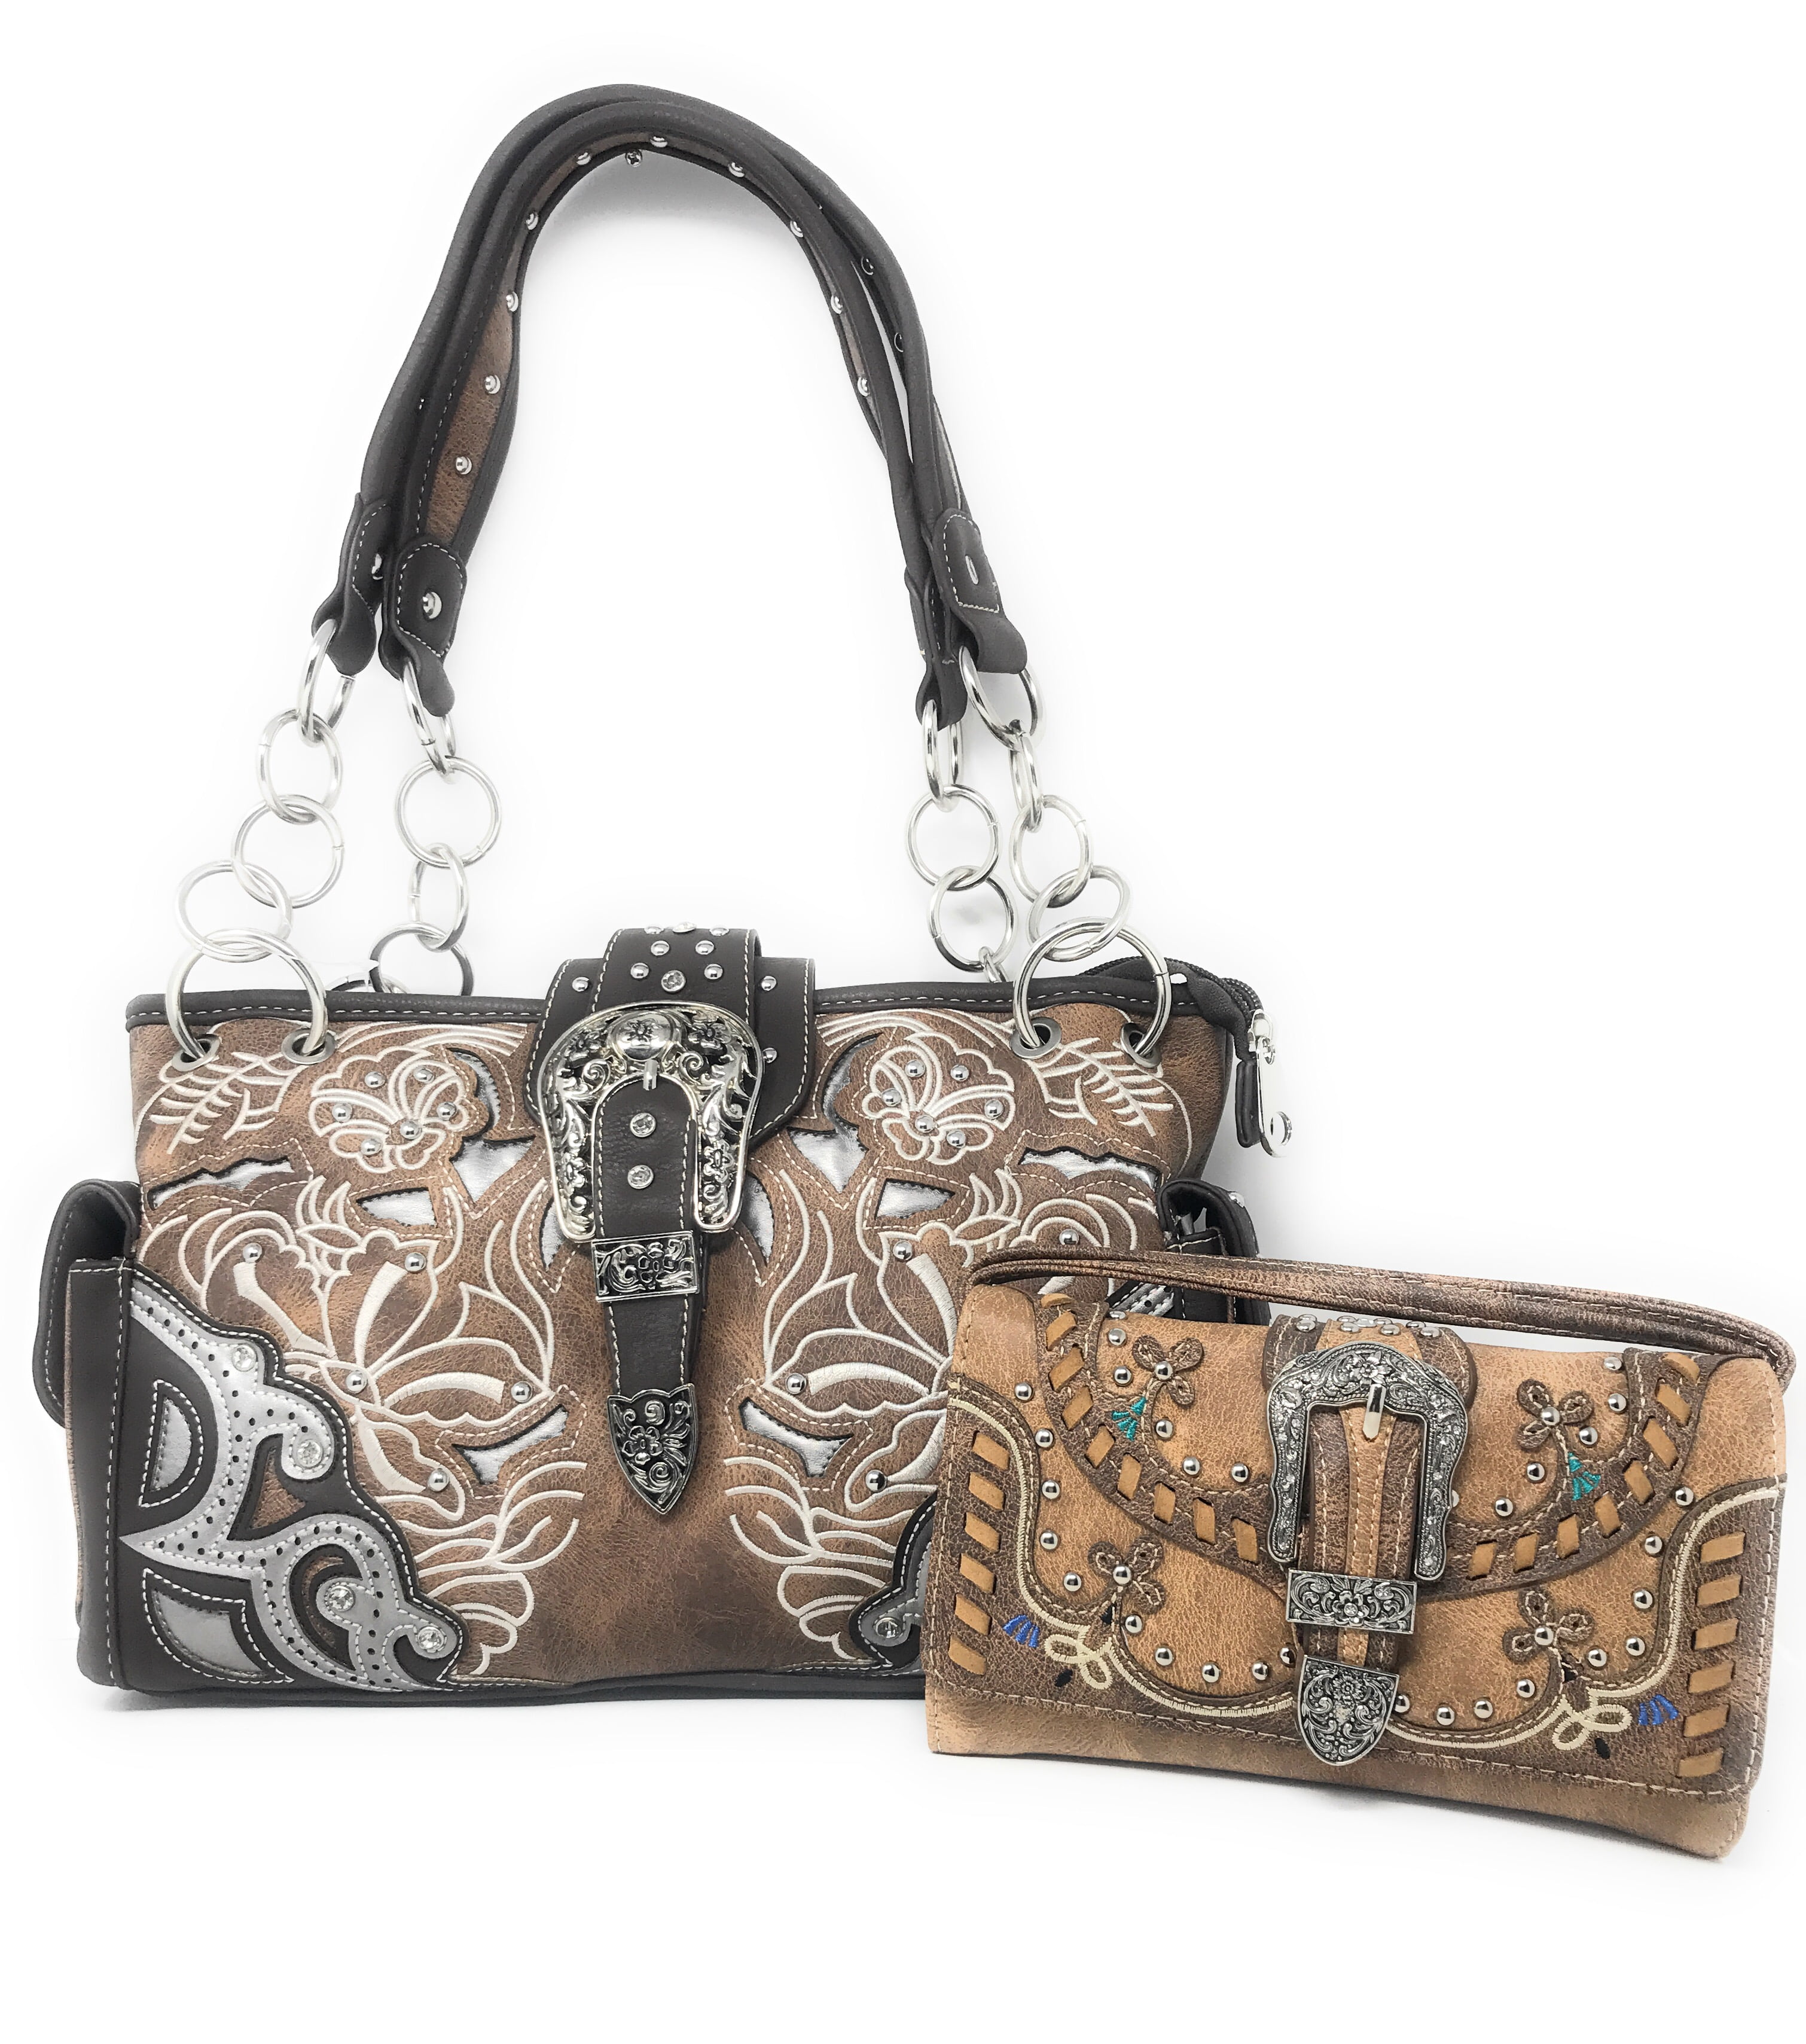 Western Rhinestone Purse Handbag/Matching Wallet | eBay | Purses and  handbags, Cross purses, Purse styles